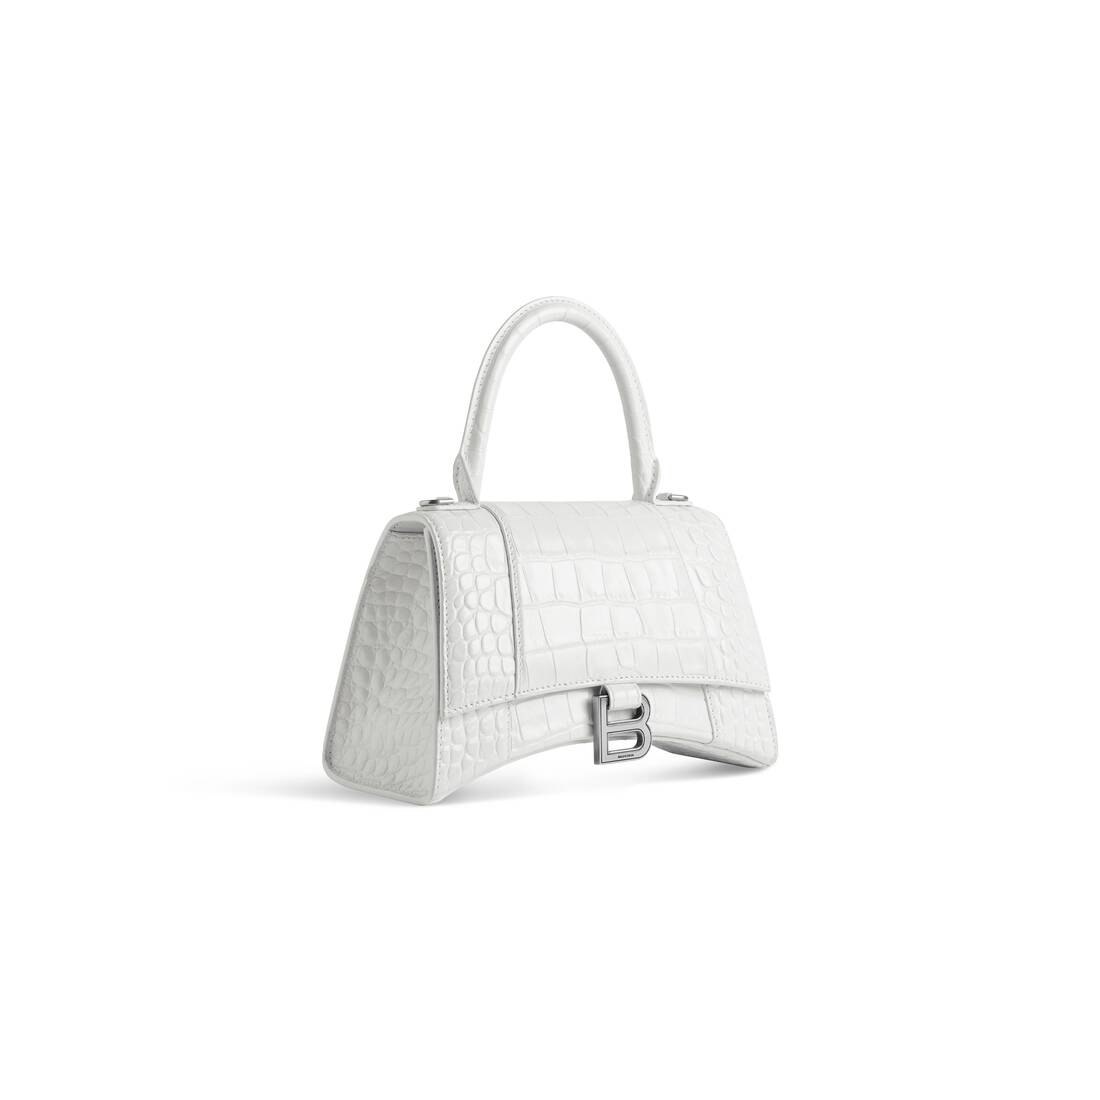 Buy White Handbags for Women by Lavie Online | Ajio.com